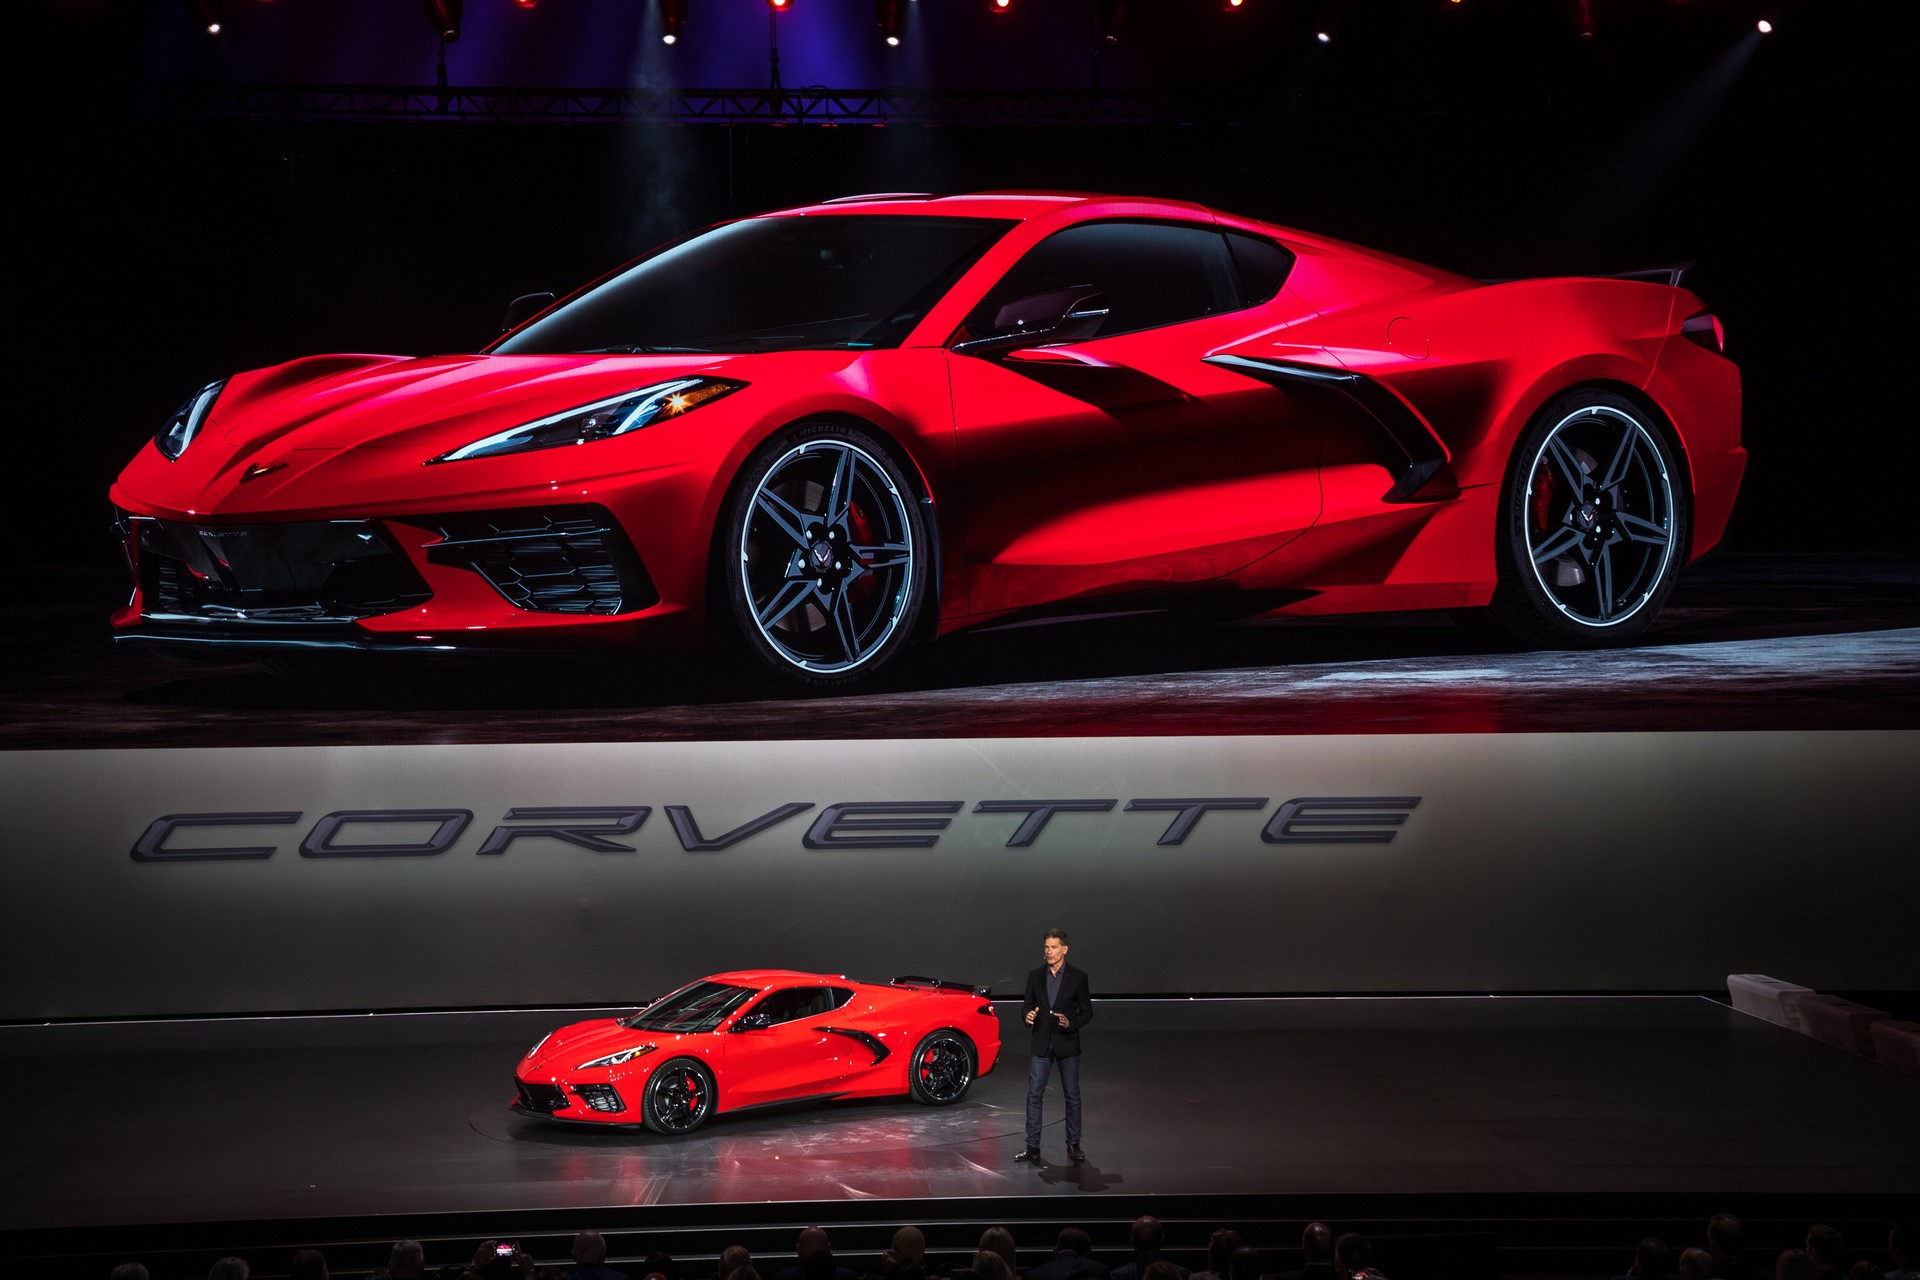 2020 Chevrolet Corvette Stingray Unveiled